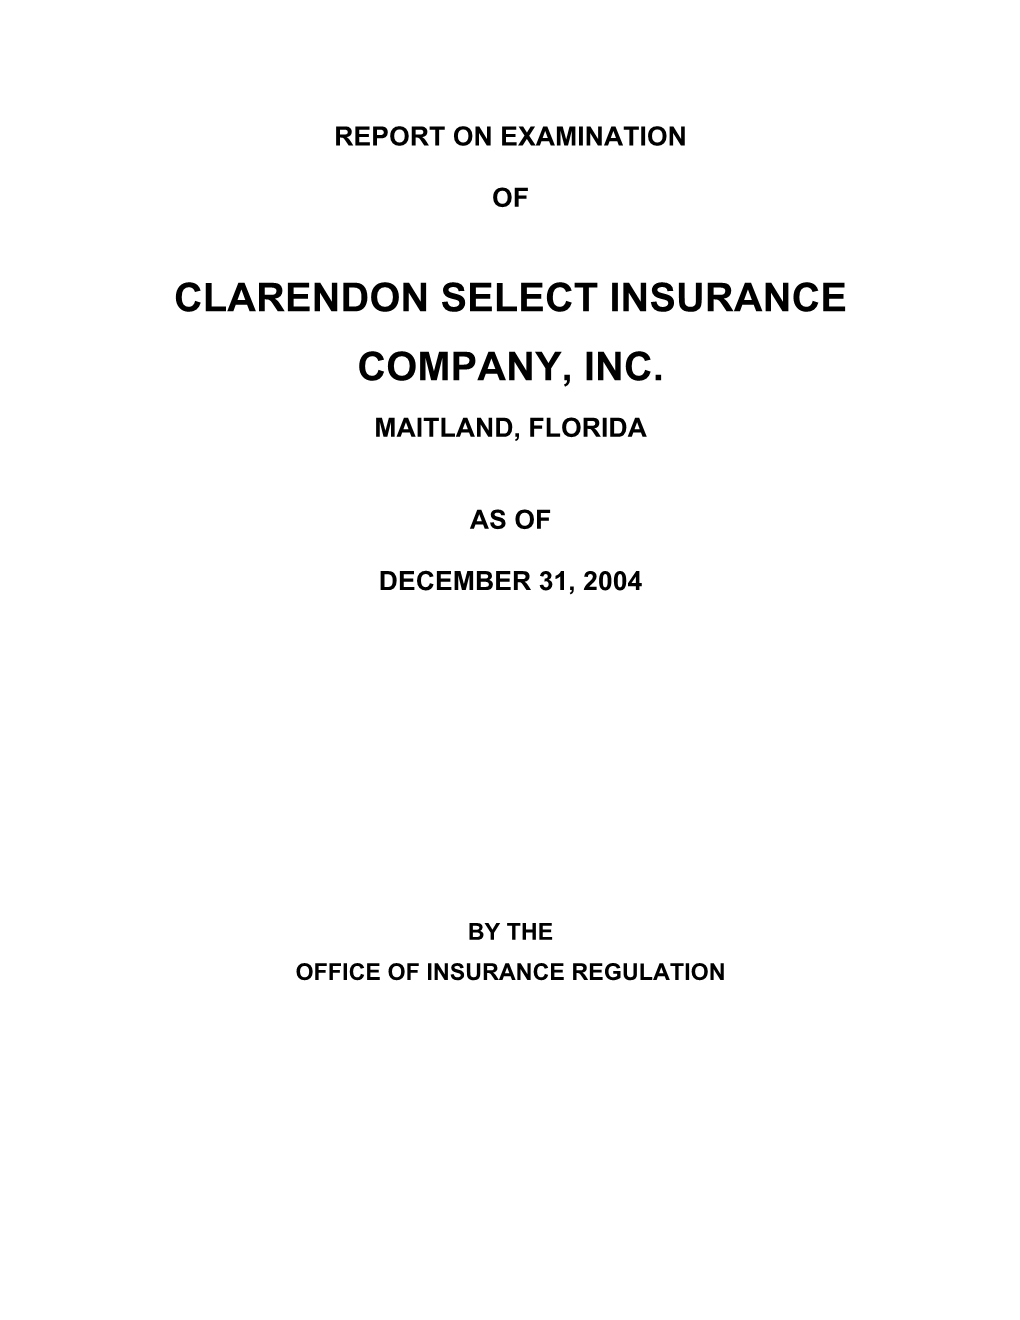 Clarendon Select Insurance Company, Inc